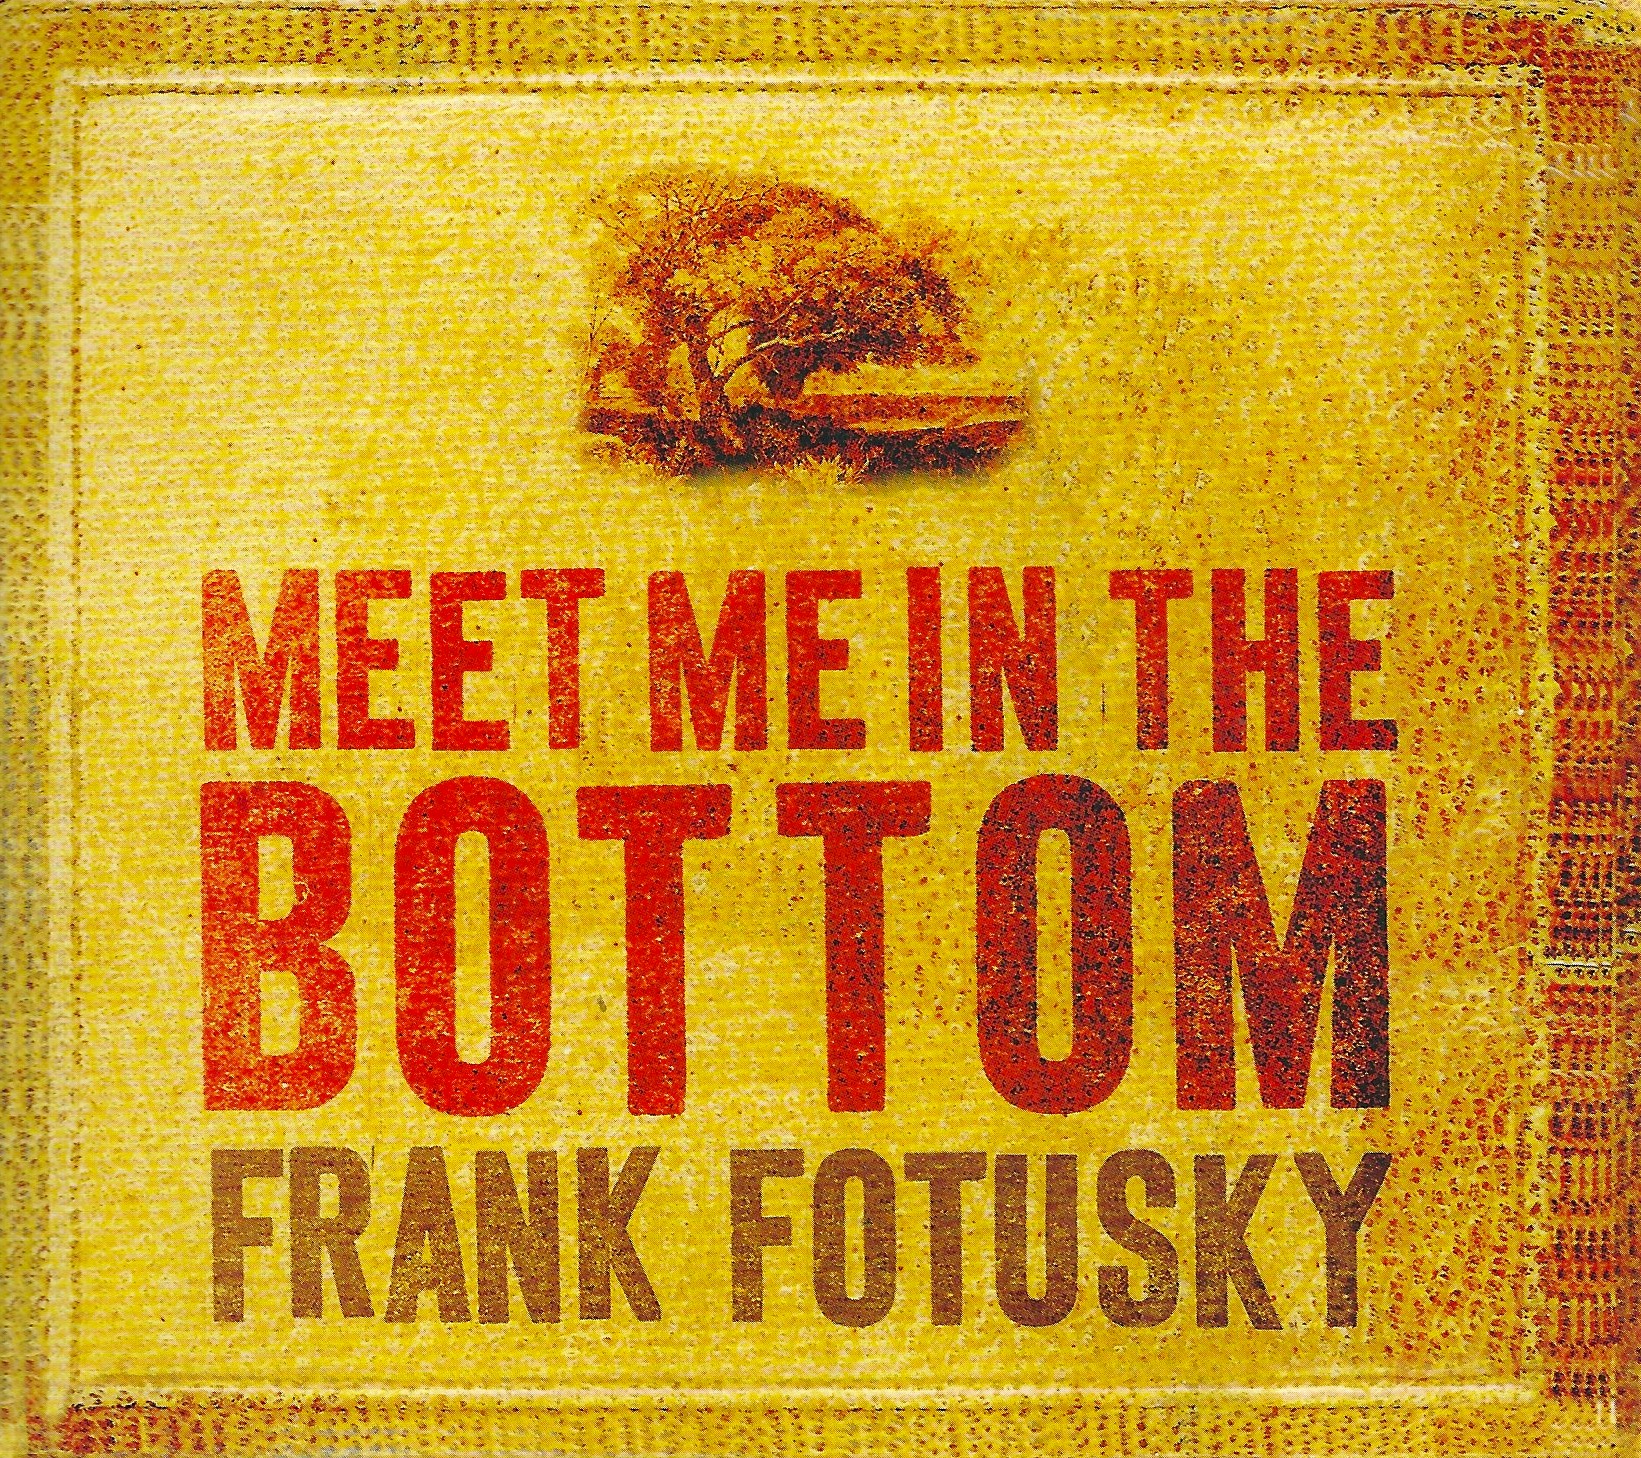 Frank Fotusky: Meet Me In The Bottom